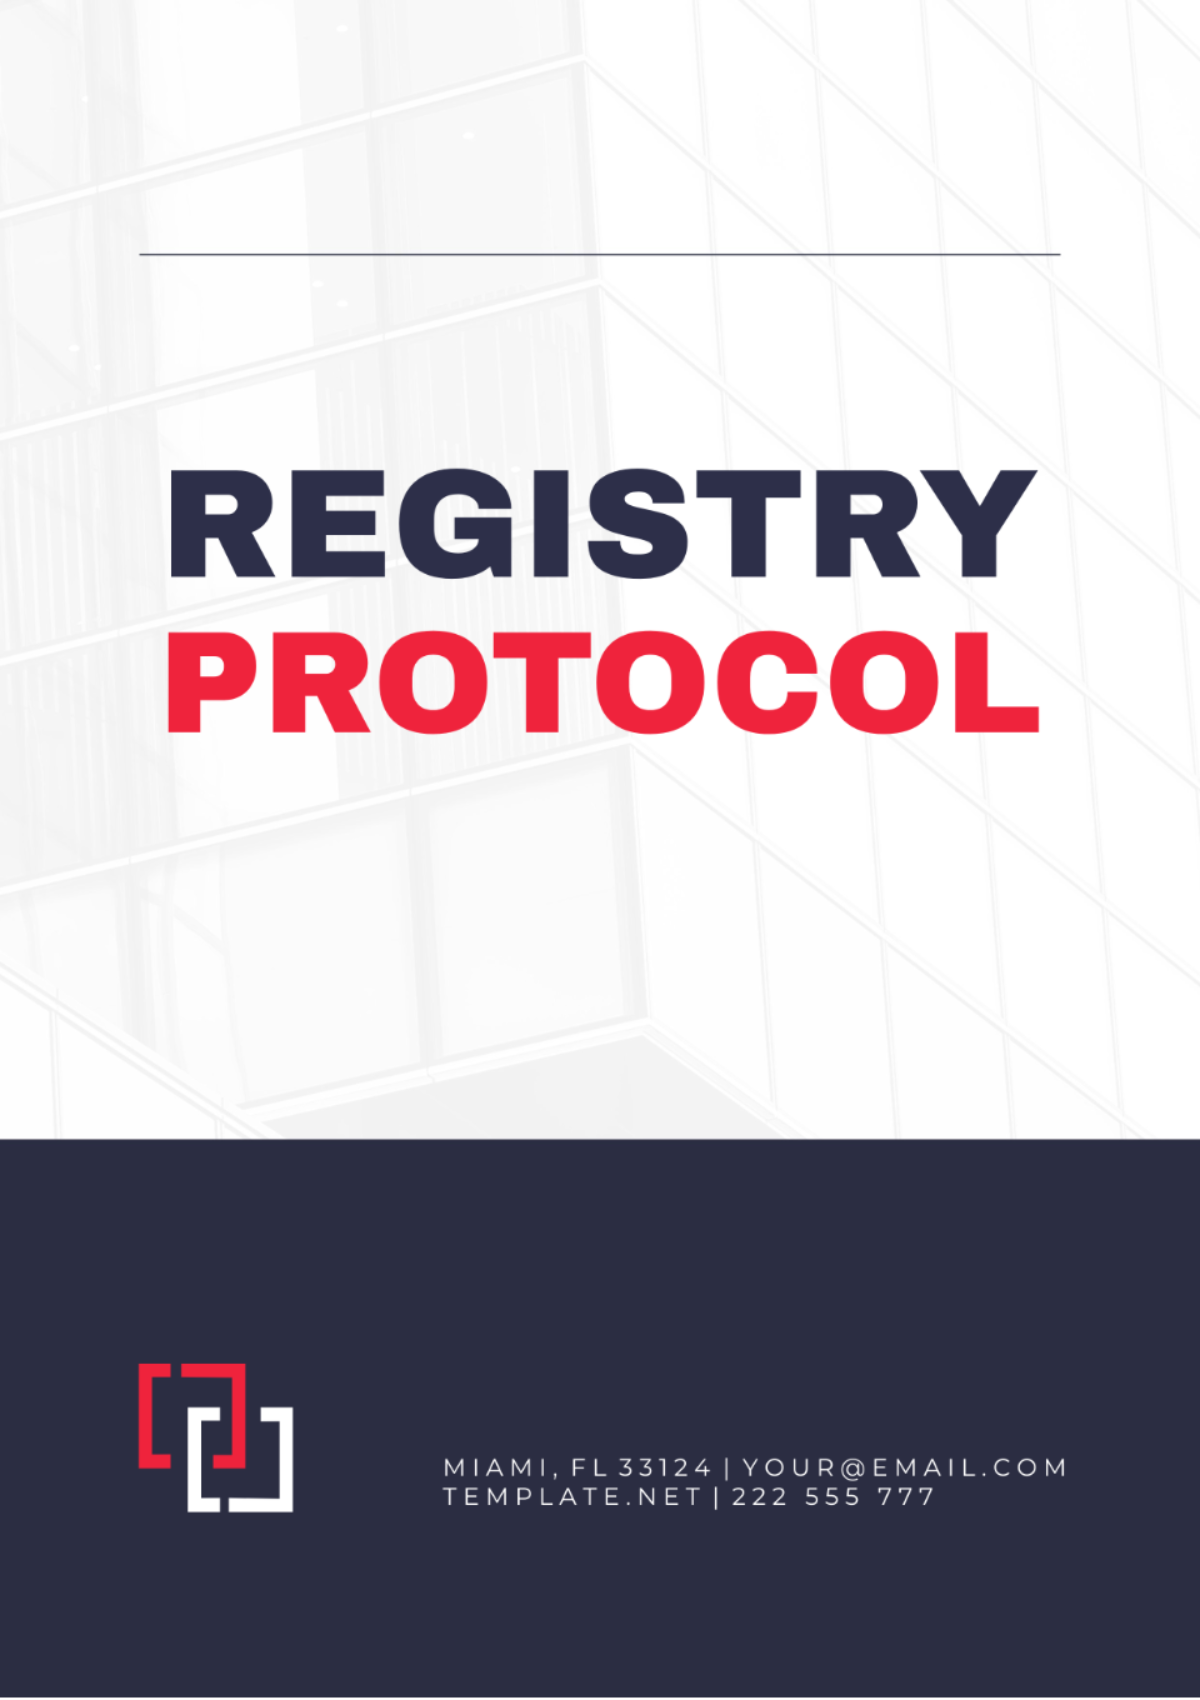 Registry Protocol Template